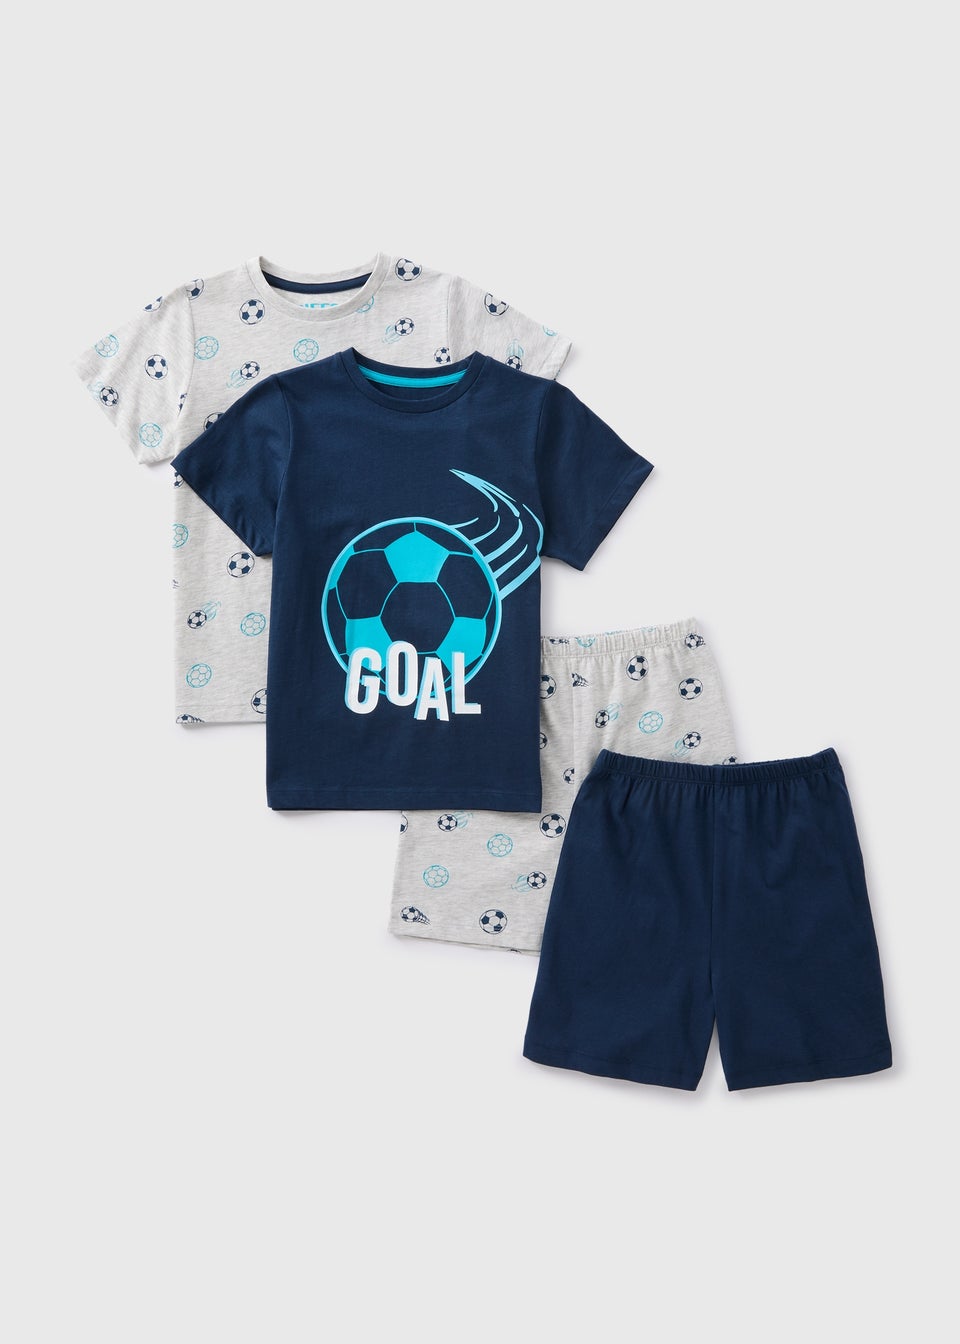 Boys 2 Pack Grey & Navy Football Pyjama Sets (18mths-13yrs)